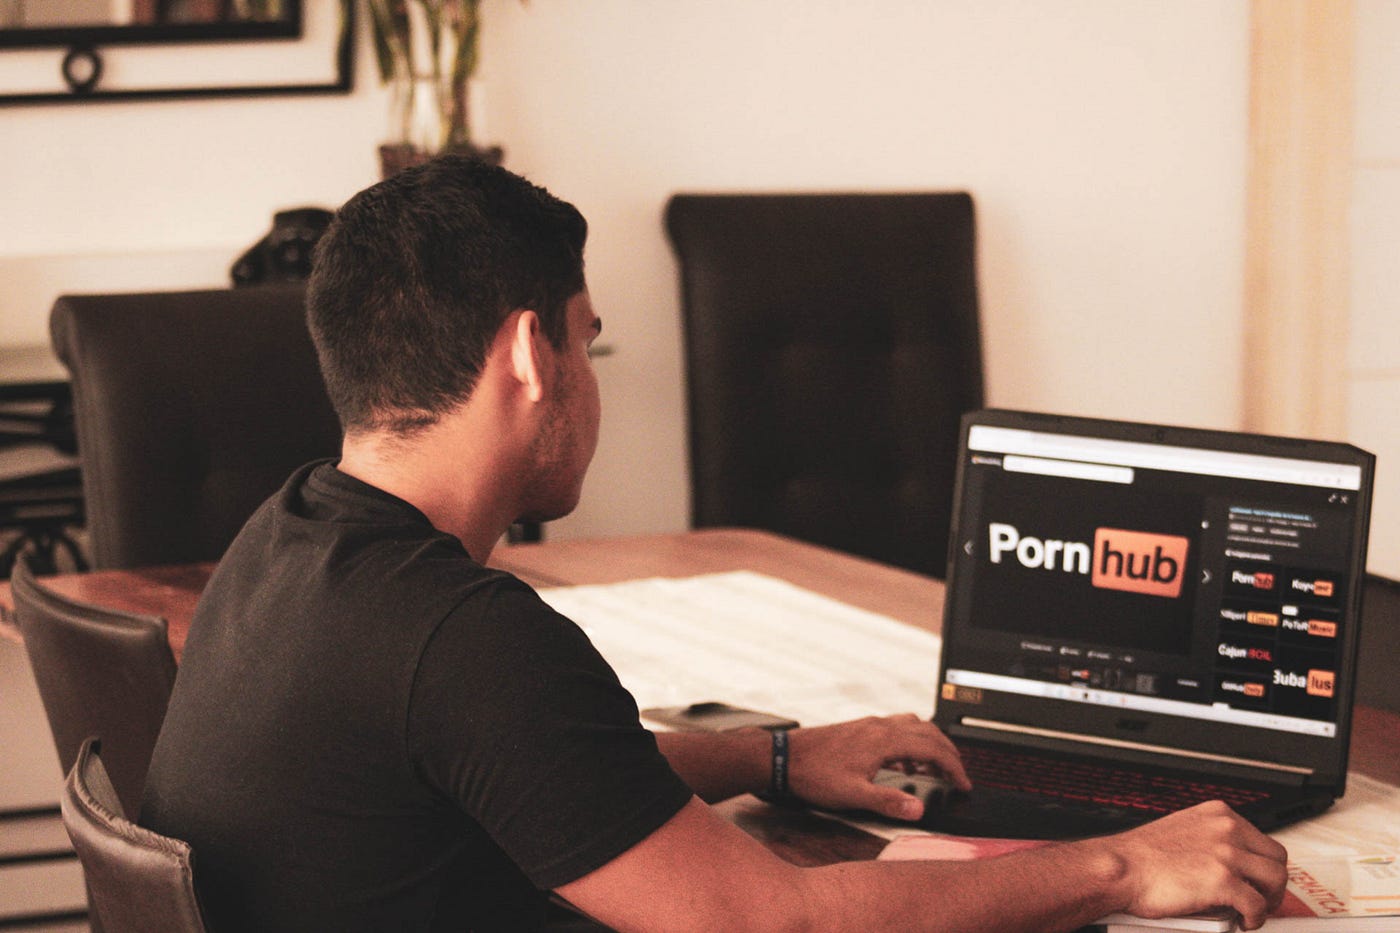 Unblok Pornhub - How to Unblock Pornhub and Watch Videos Privately? | ILLUMINATION